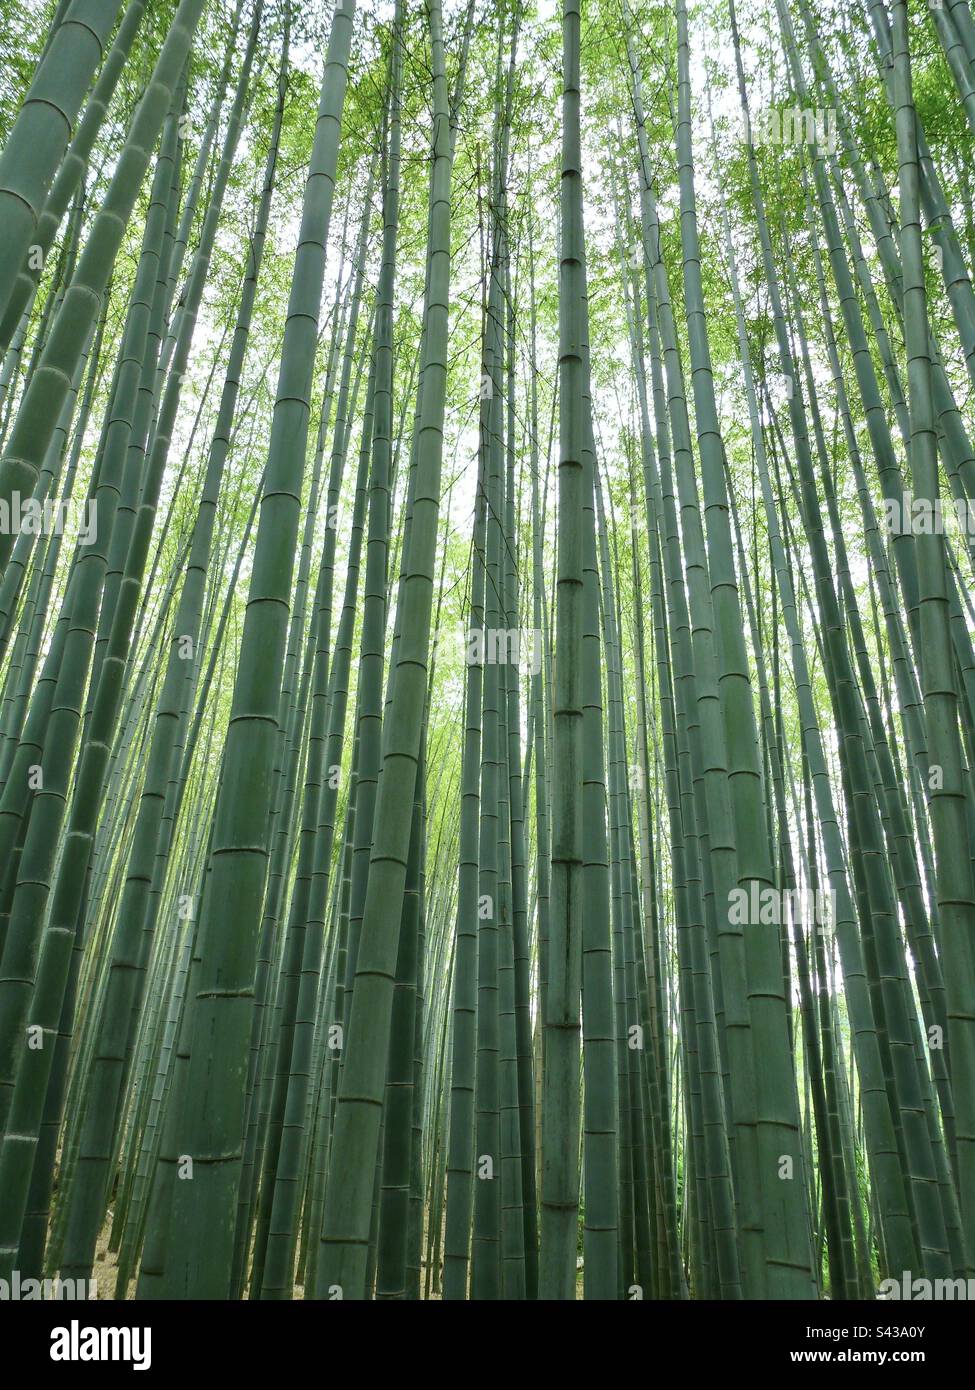 Lunghe canne di bambù verdi che crescono strettamente impaccate insieme in una foresta di bambù impenetrabile, Kyoto, giappone Foto Stock